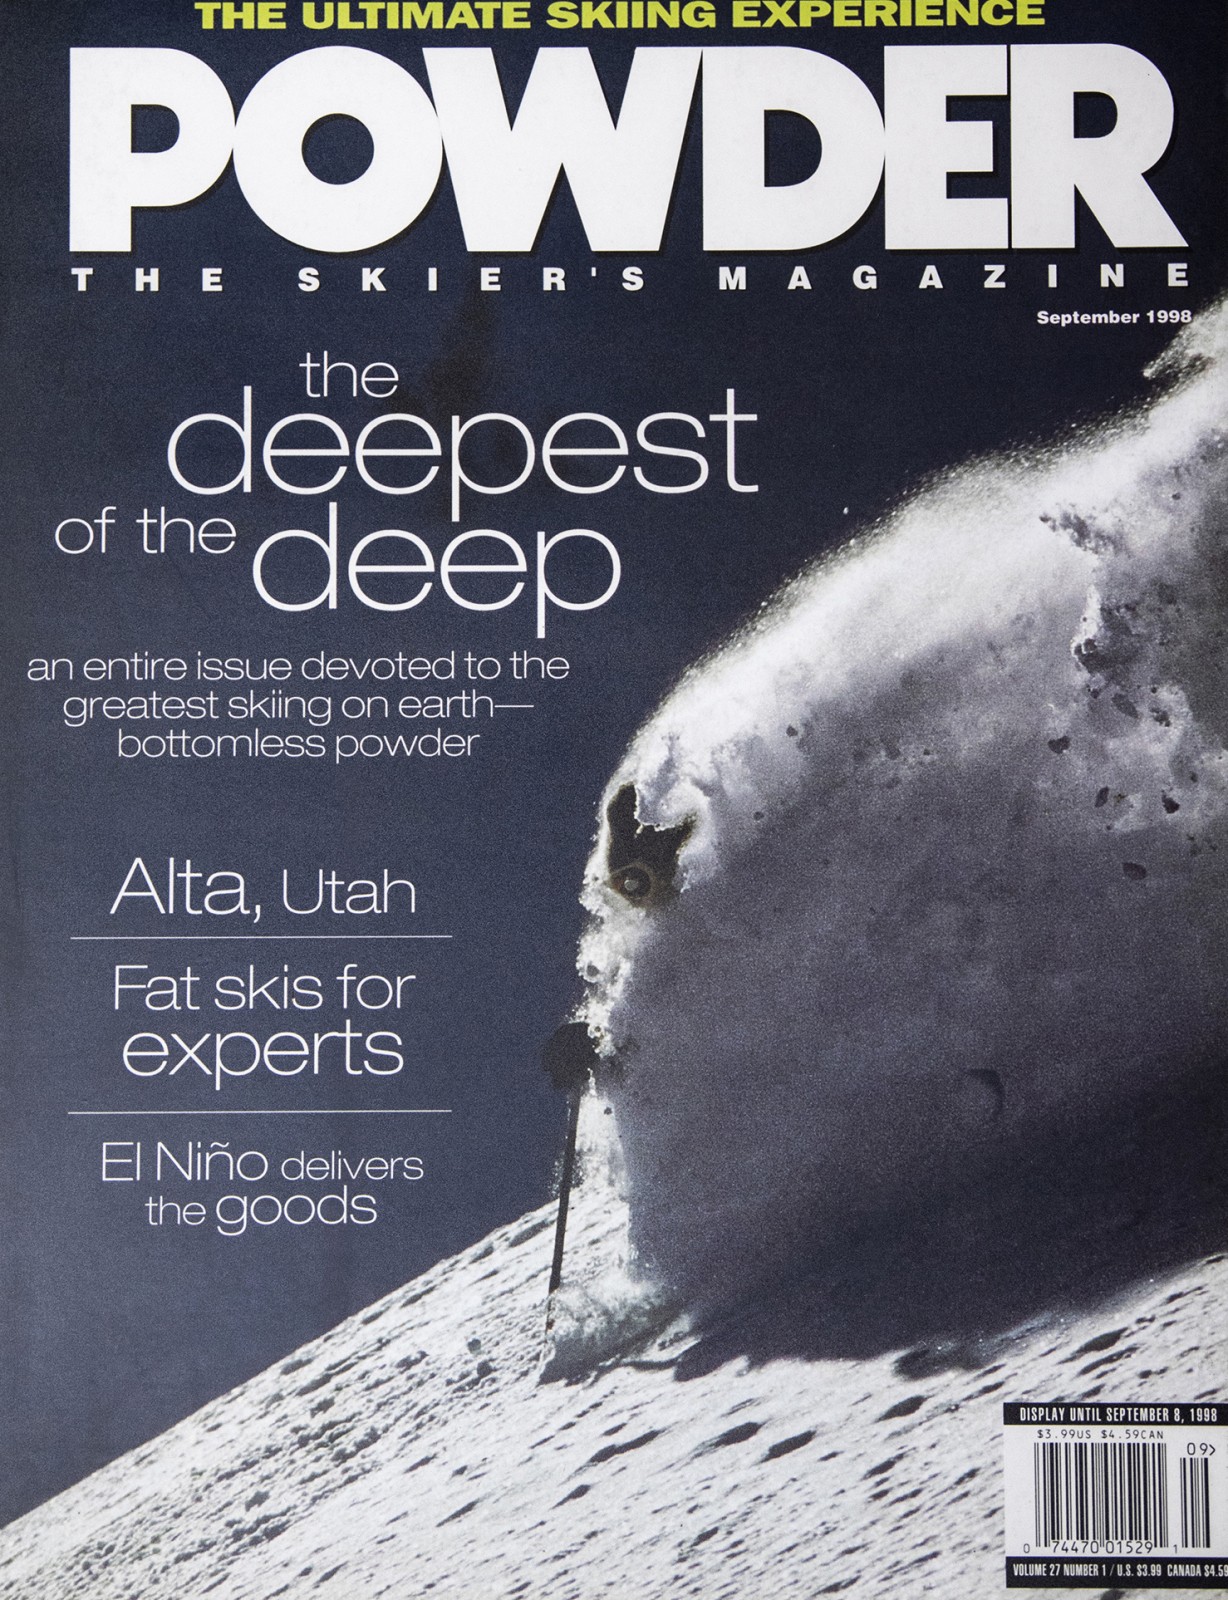 Spin Boy Powder Cover Sept1998 144dpijpg